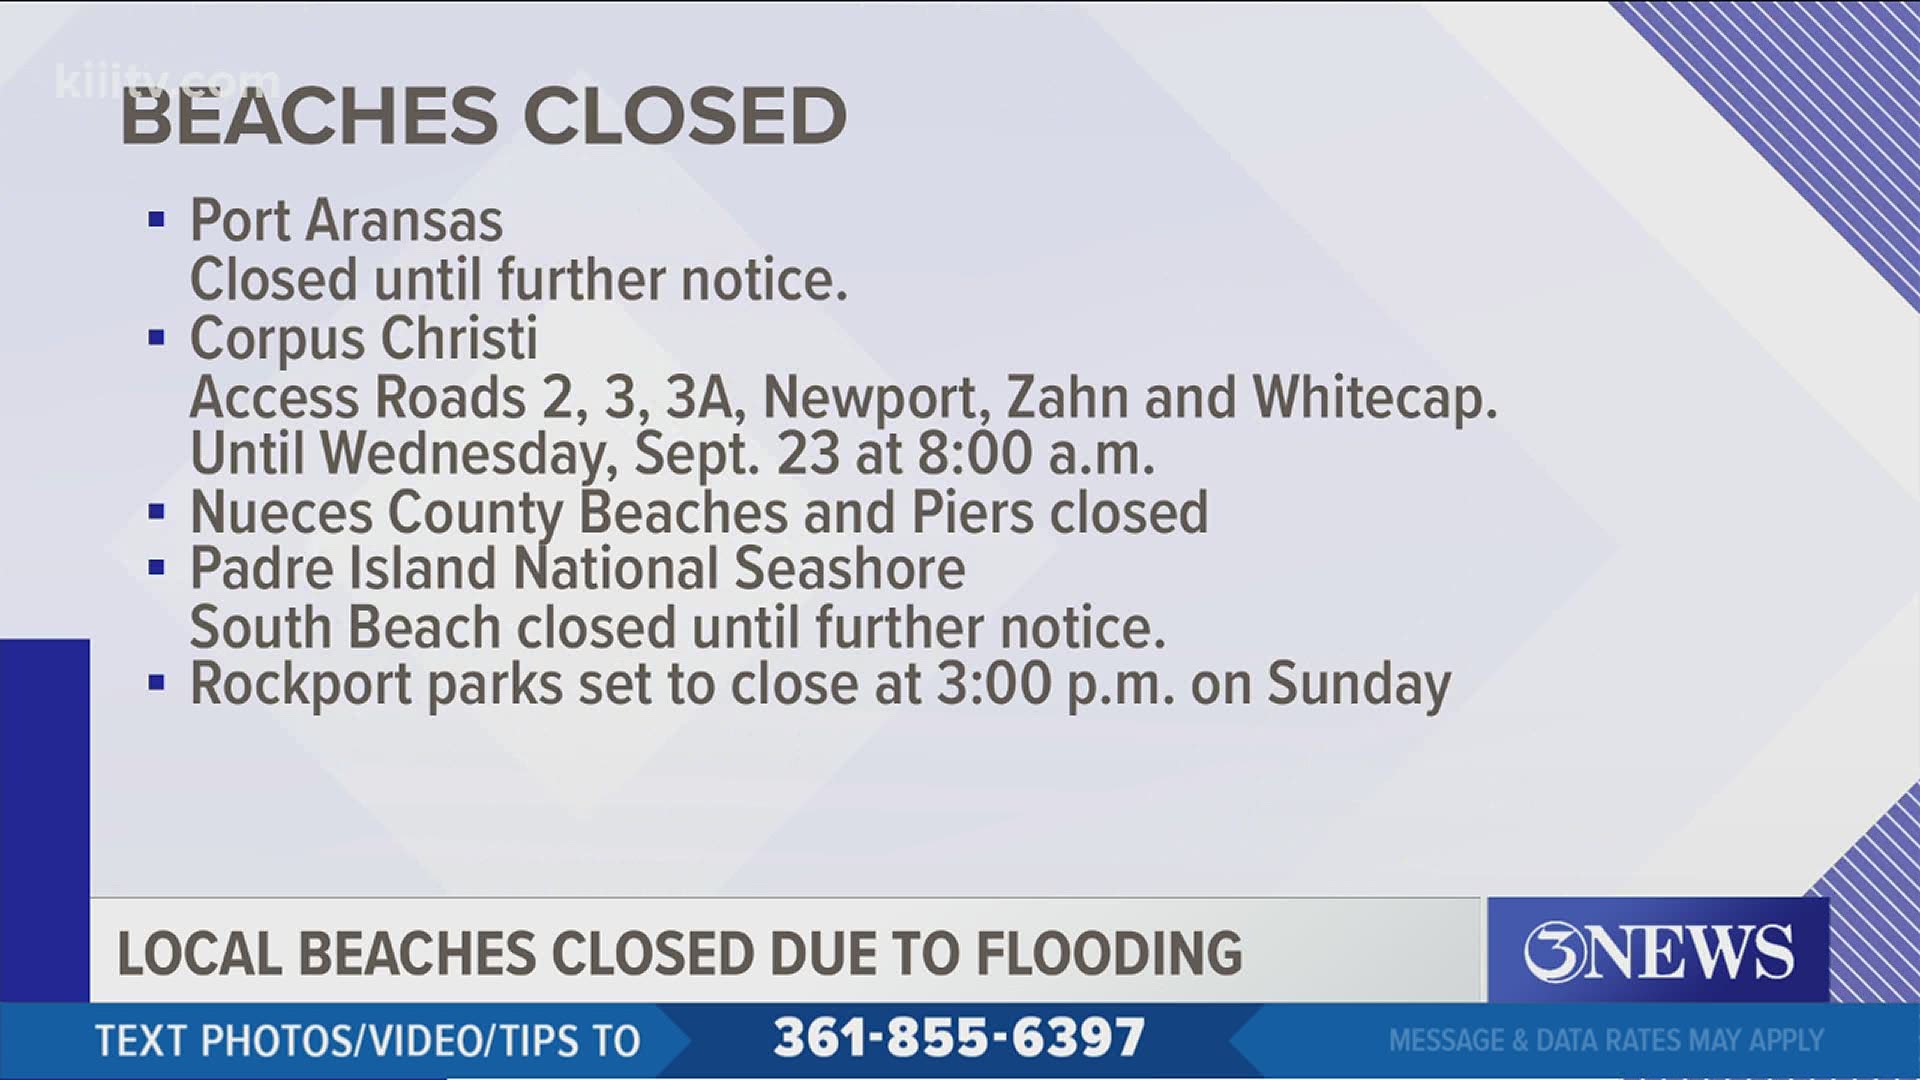 All Port Aransas Beaches will close Saturday, Sept. 19 at 8 p.m. until further notice.